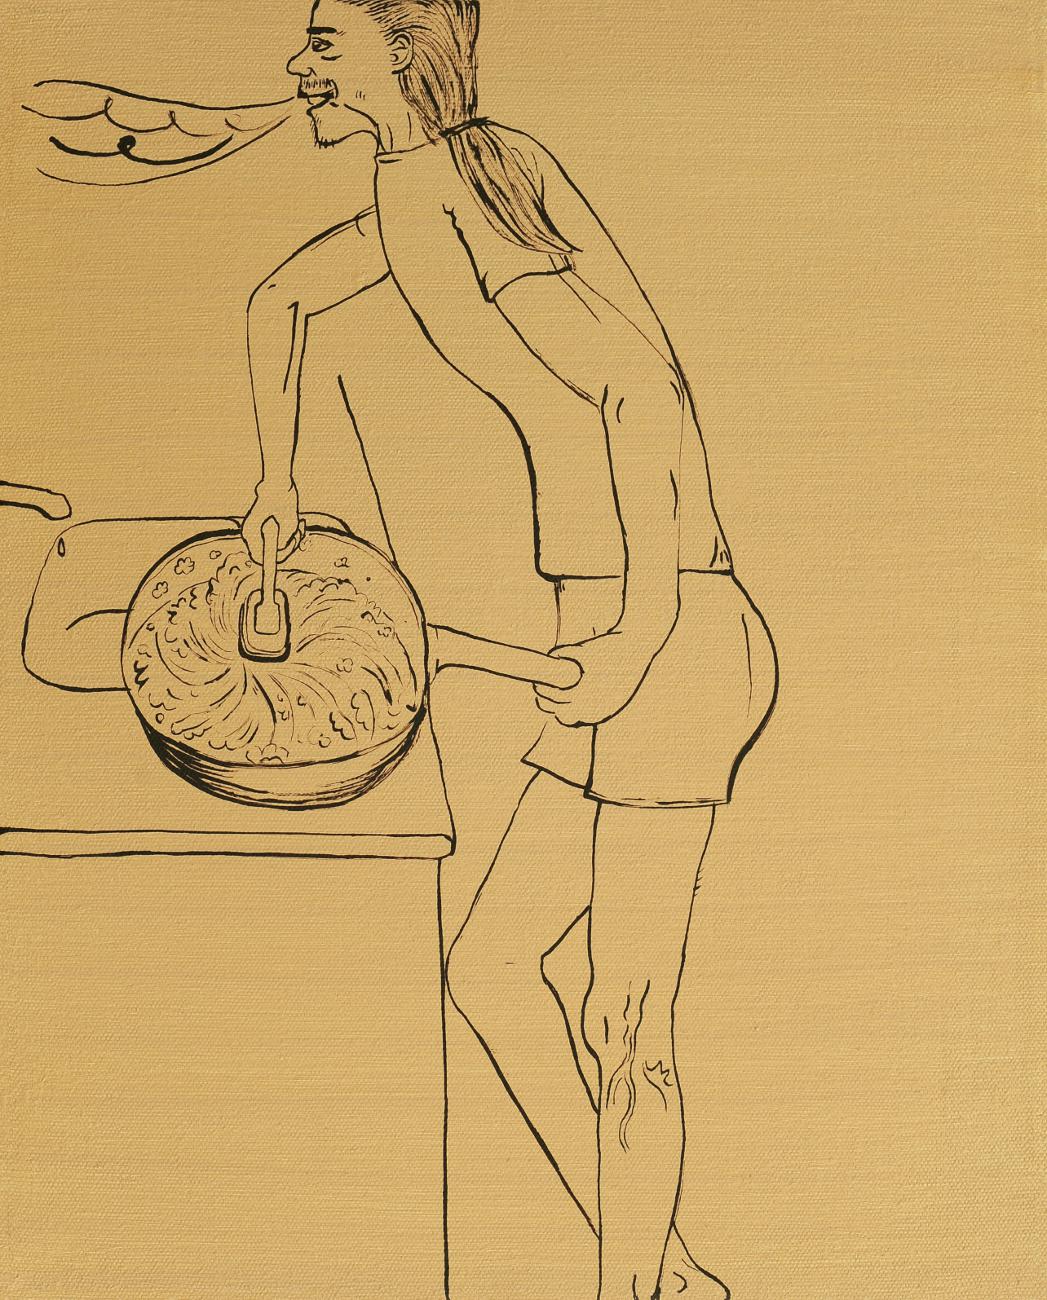 Jan Karpíšek: Dishwashing Bloom, acryl on canvas, 50x40 cm, 2011